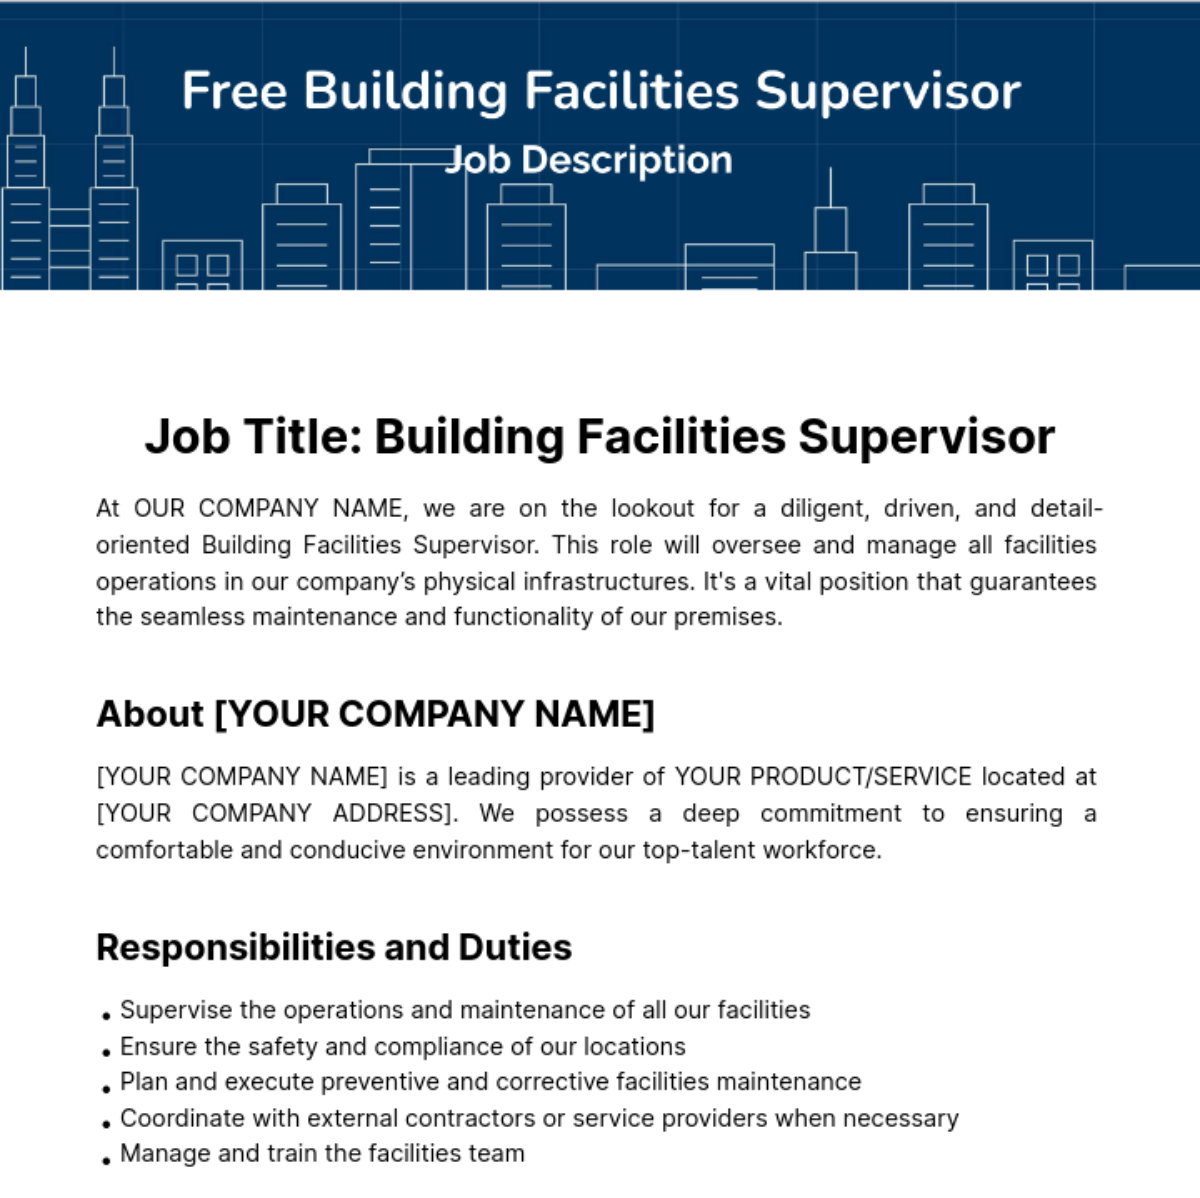 Building Facilities Supervisor Job Description Template